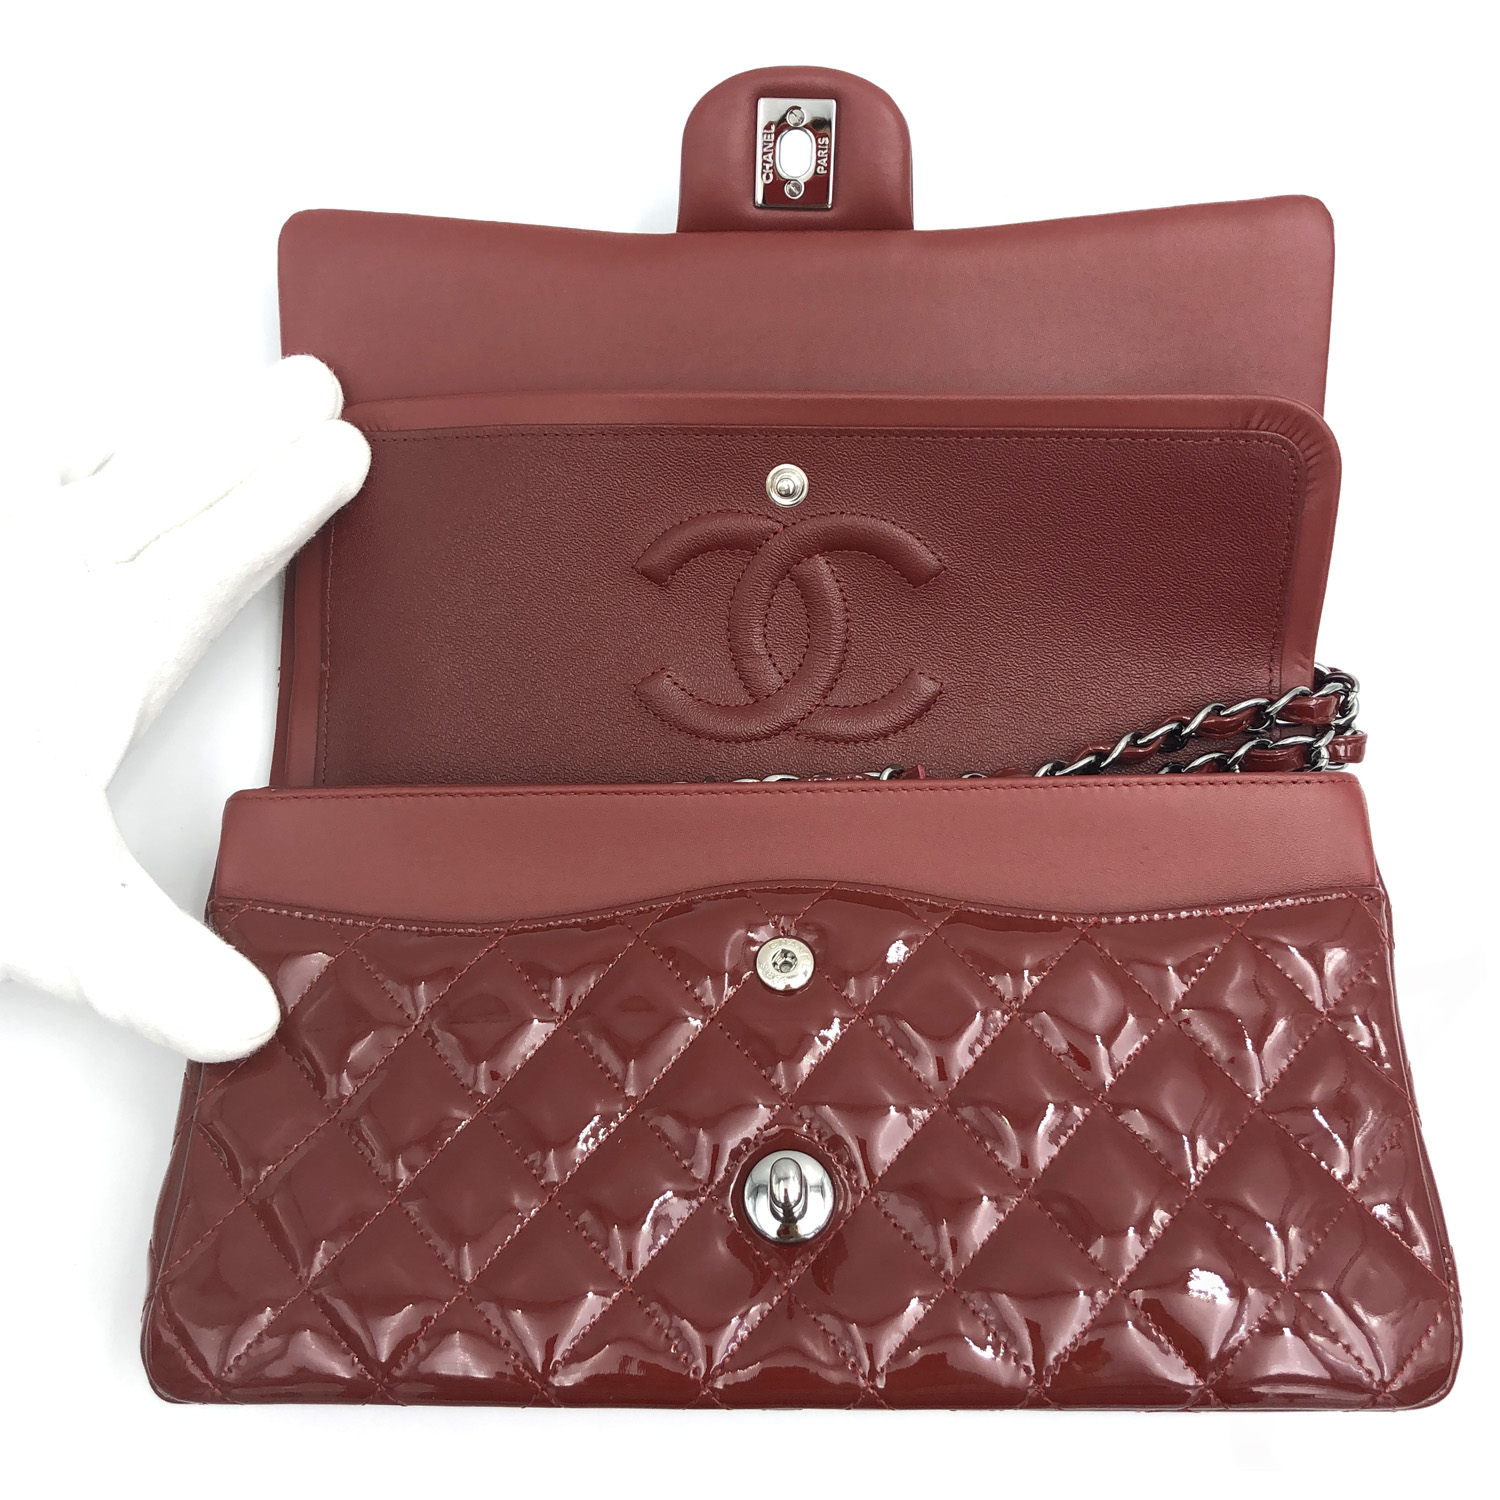 Chanel Timeless Handbag 344396